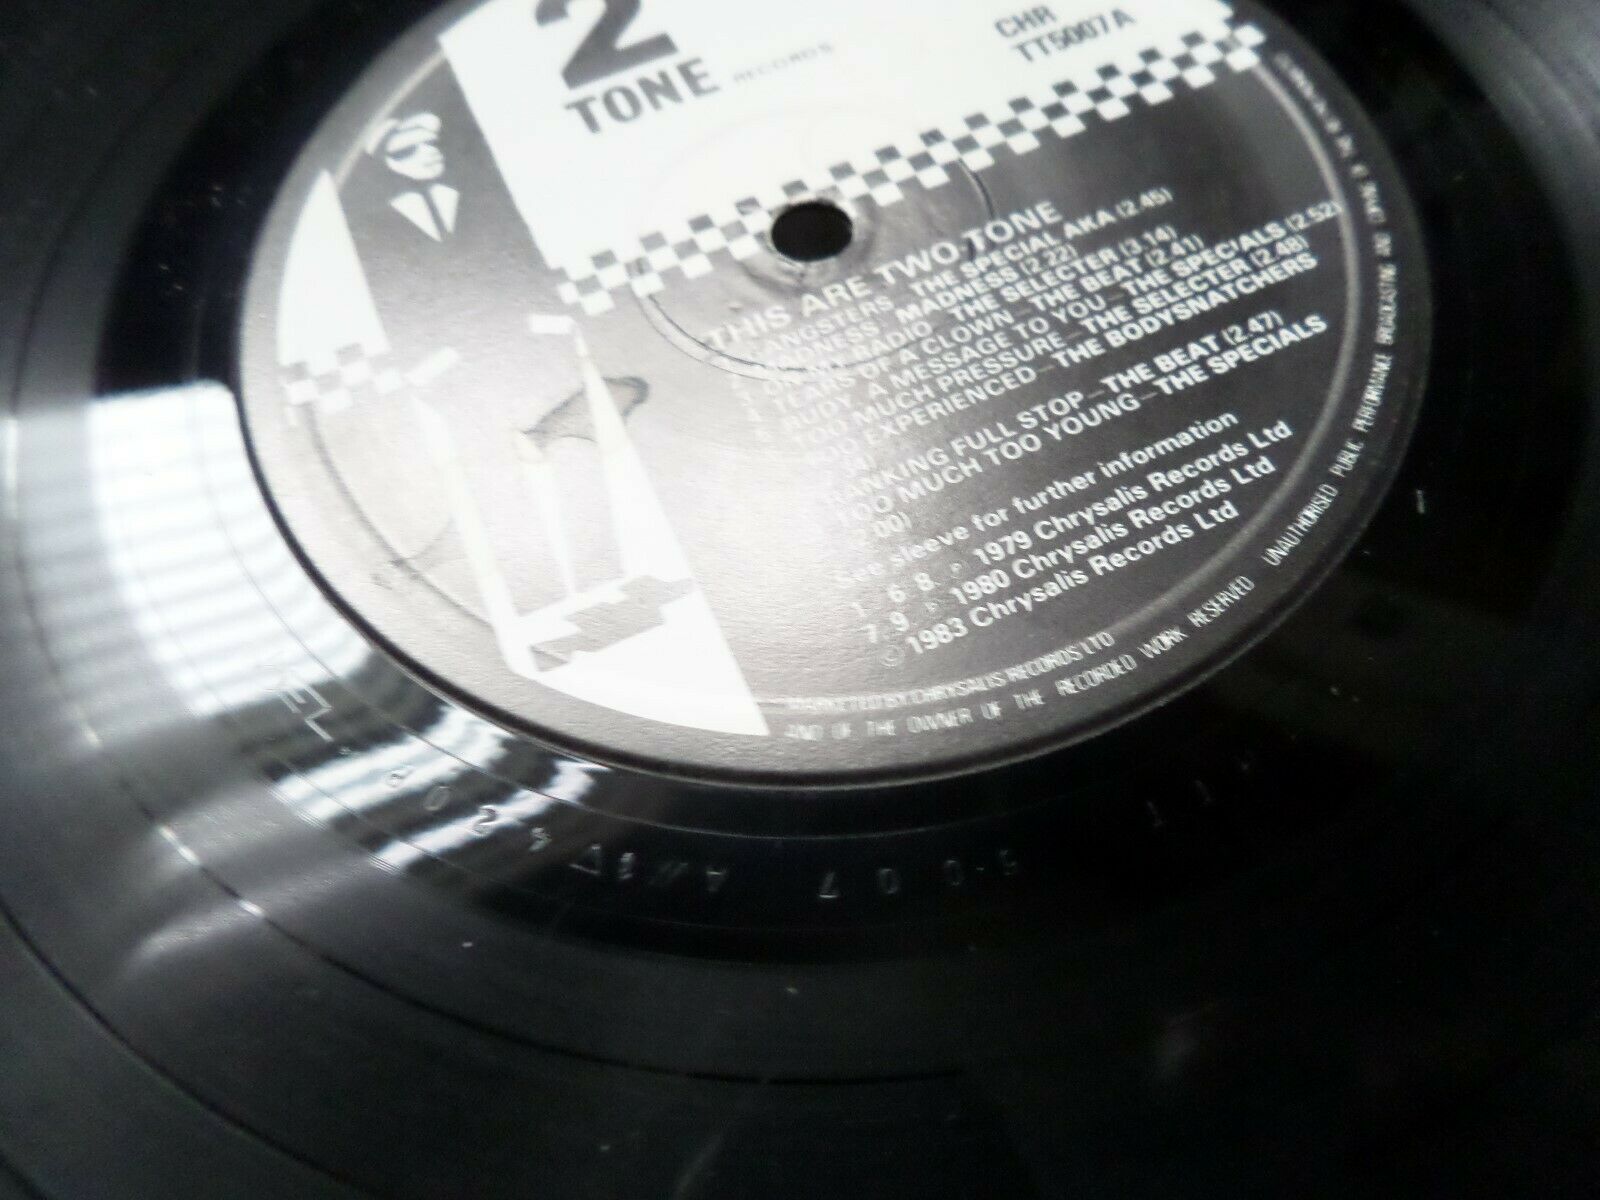 Pic 3 2 TONE THIS ARE 2 TONE UK 2 TONE VINYL LP PINK COVER 1983 ORIGINAL 1ST PRESSING